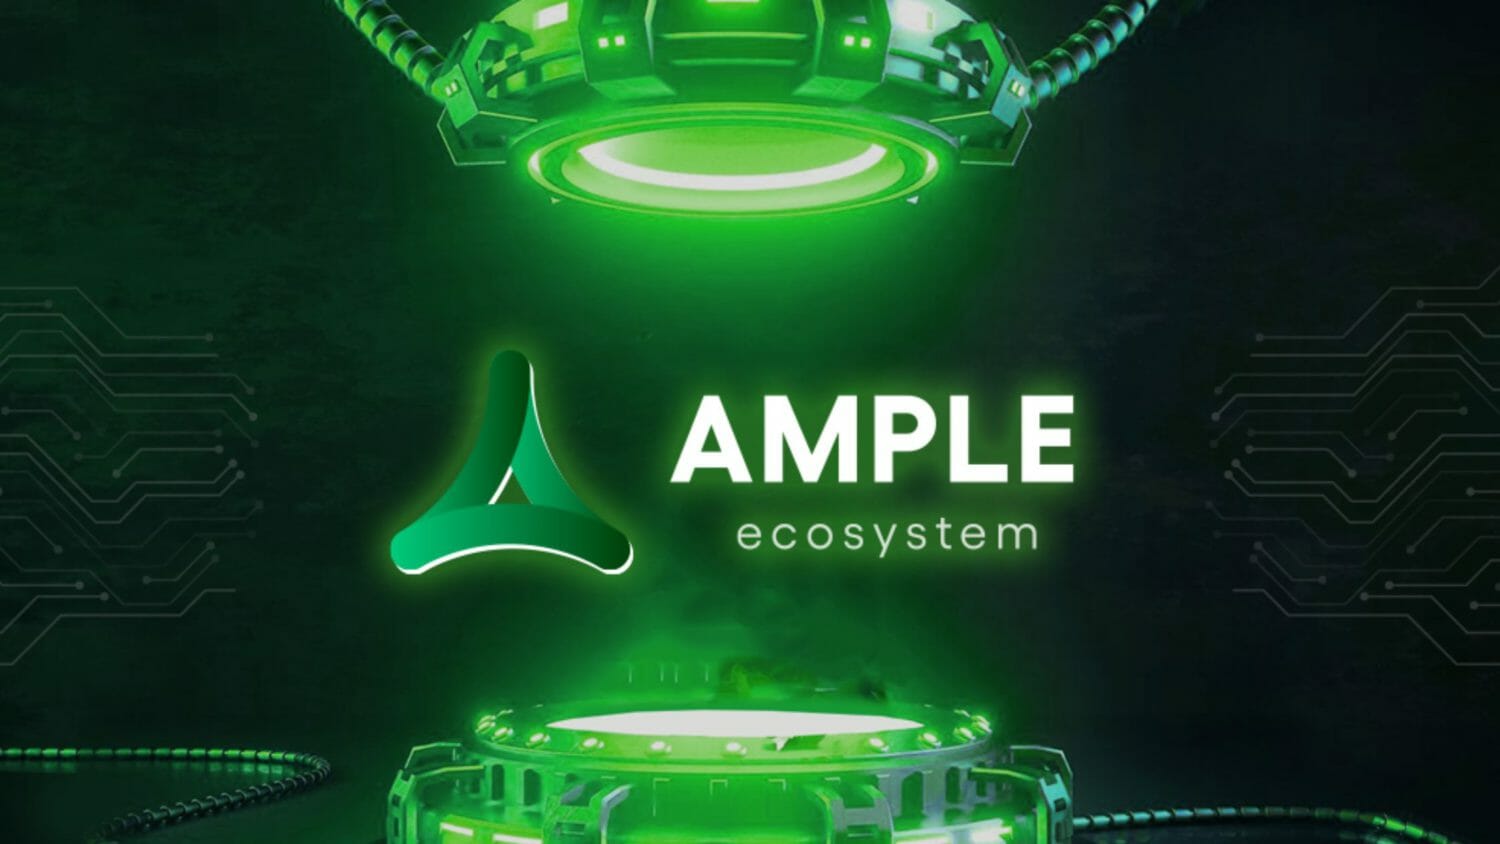 Ample Ecosystem